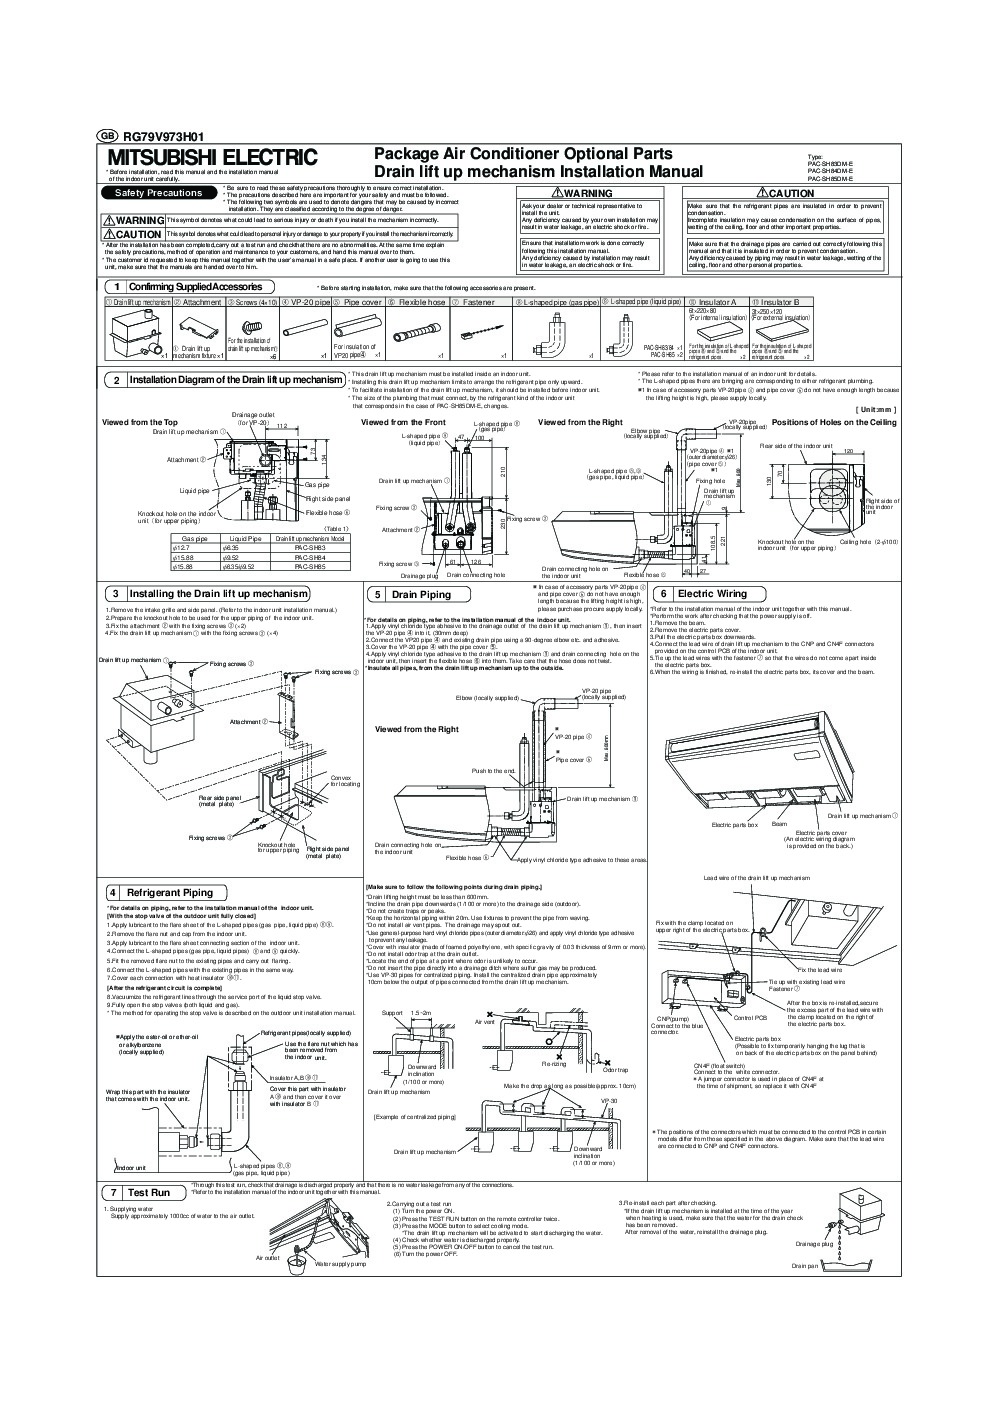 Mac-333if-e Installation Manual